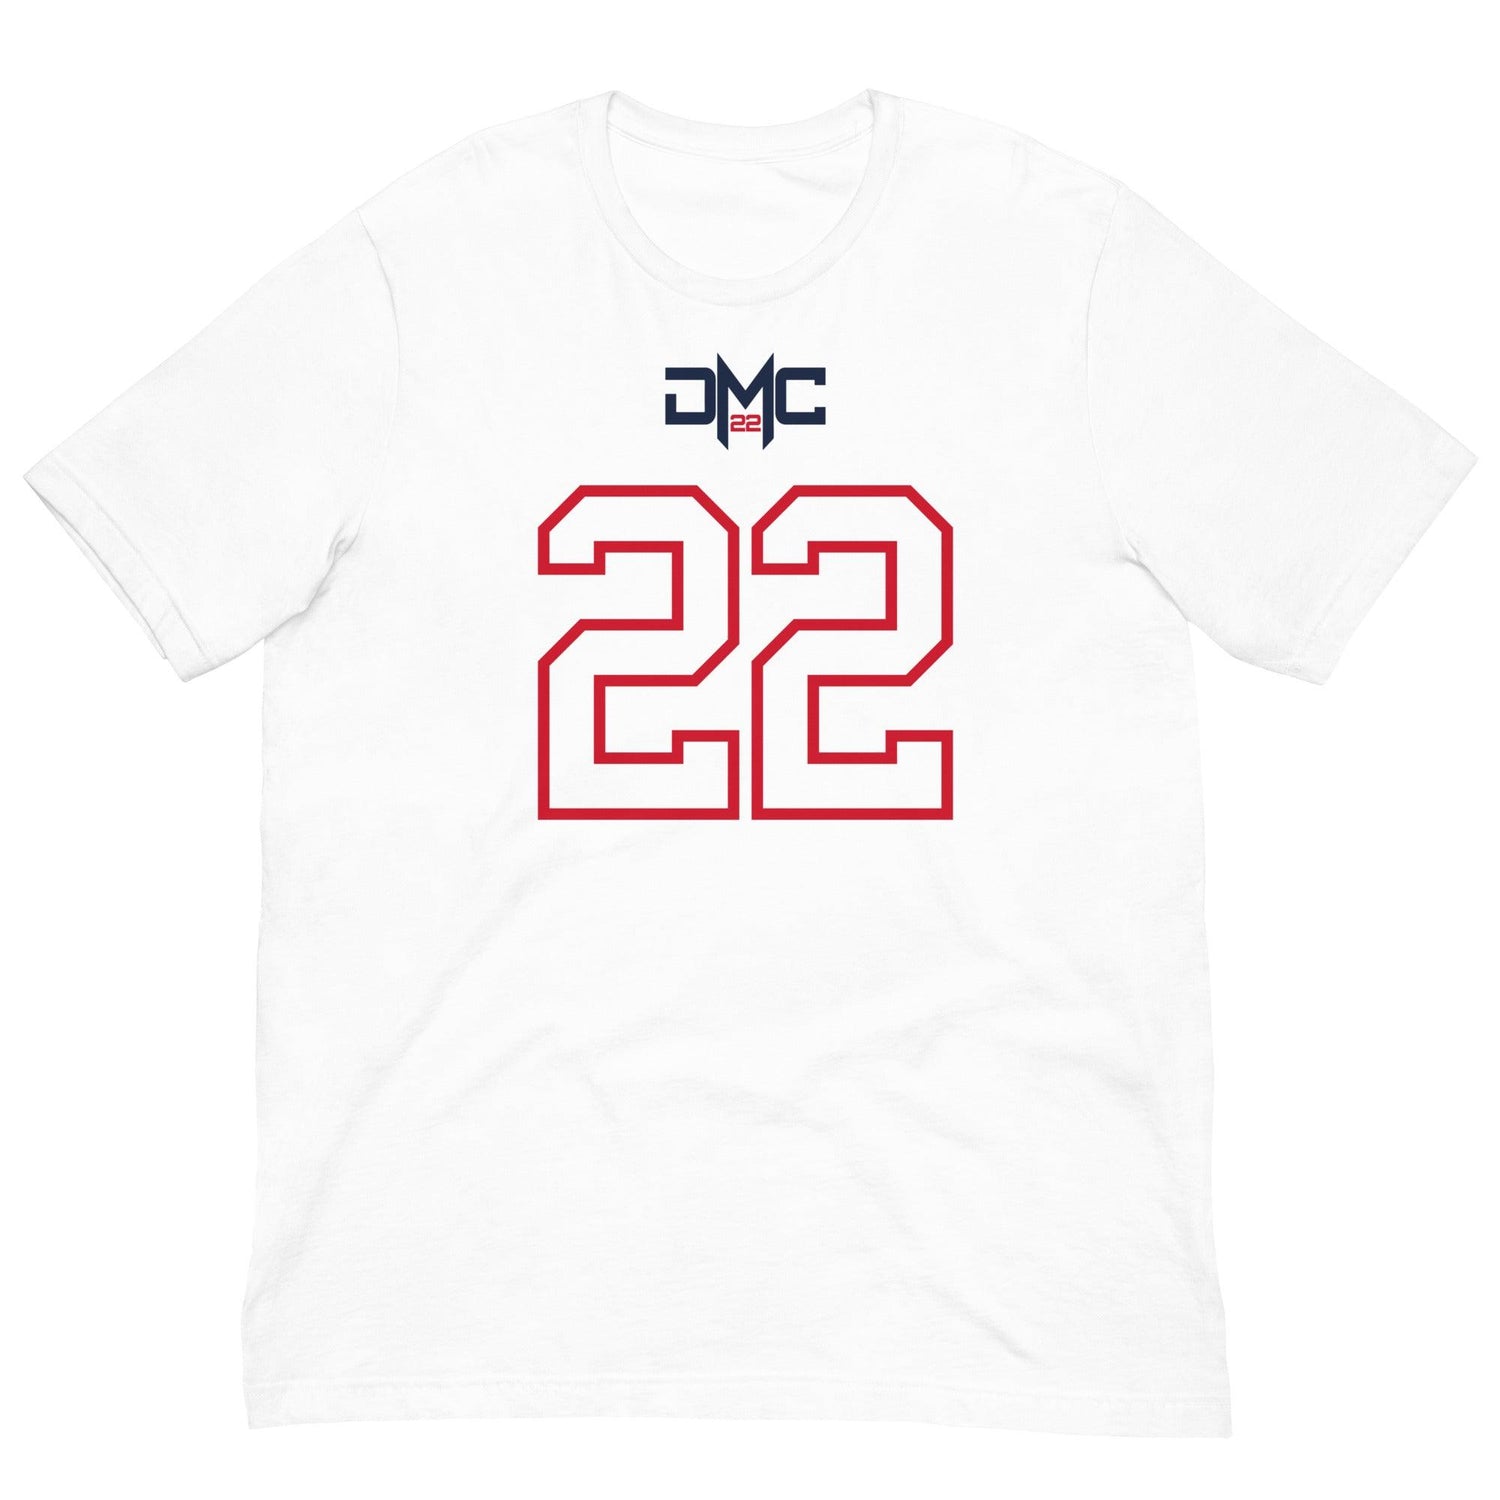 Dexter McCluster "Jersey" t-shirt - Fan Arch